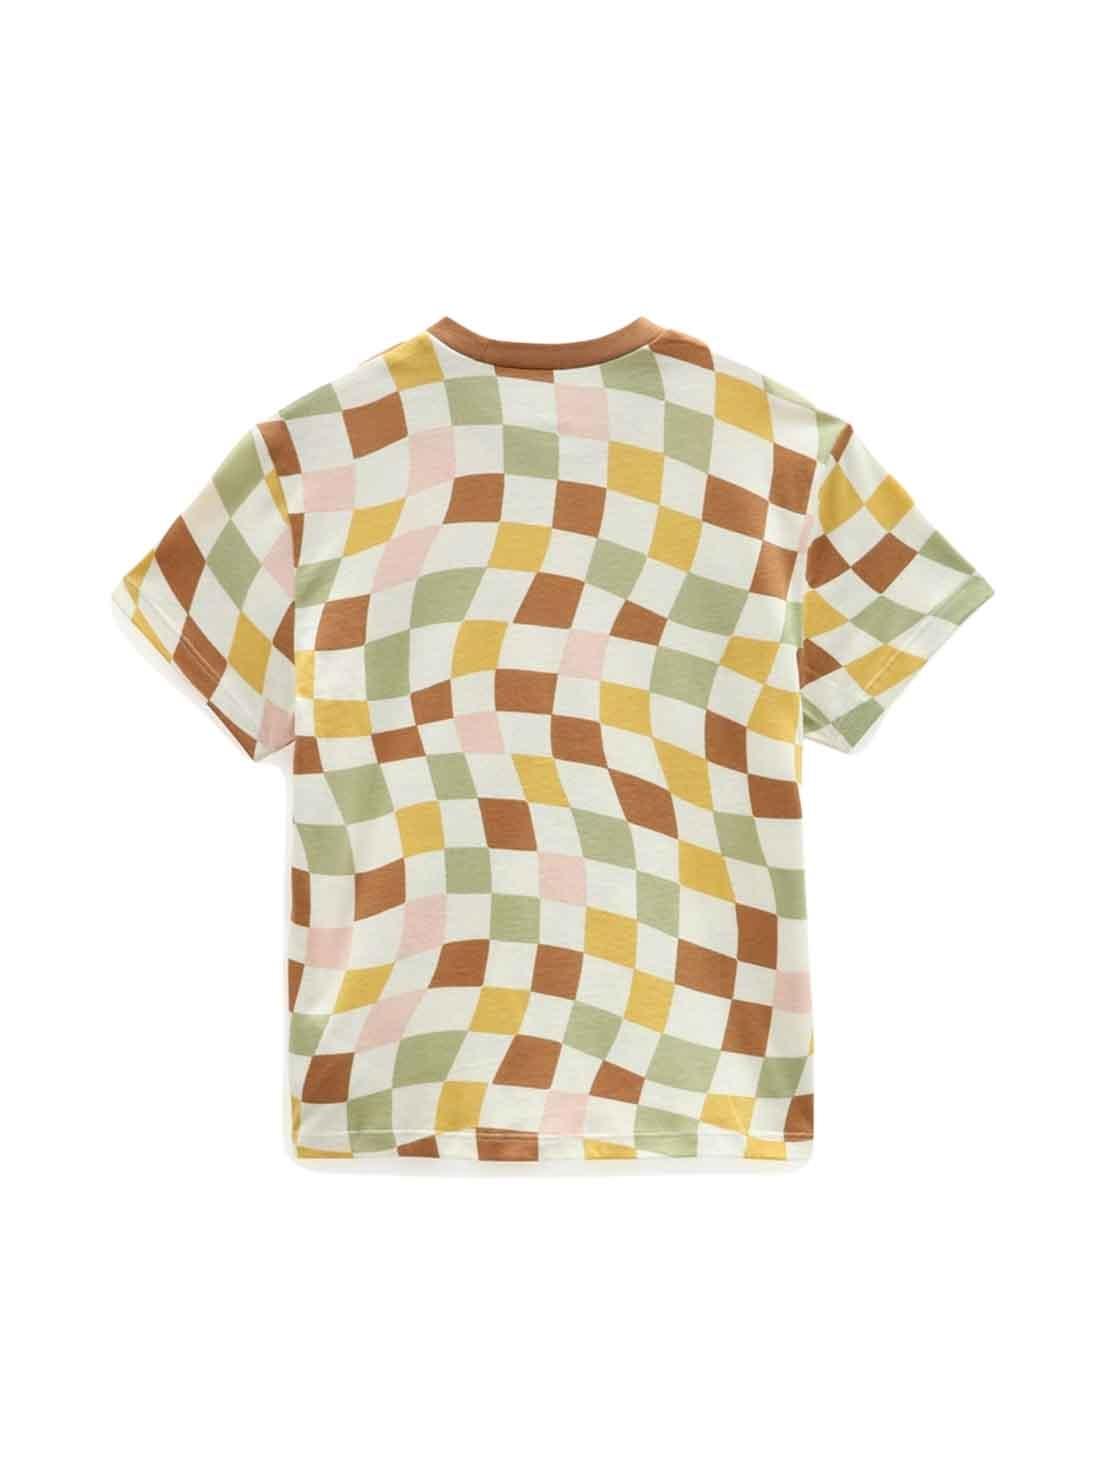 T-Shirt Vans Checker Print Multi per Bambino e Bambina